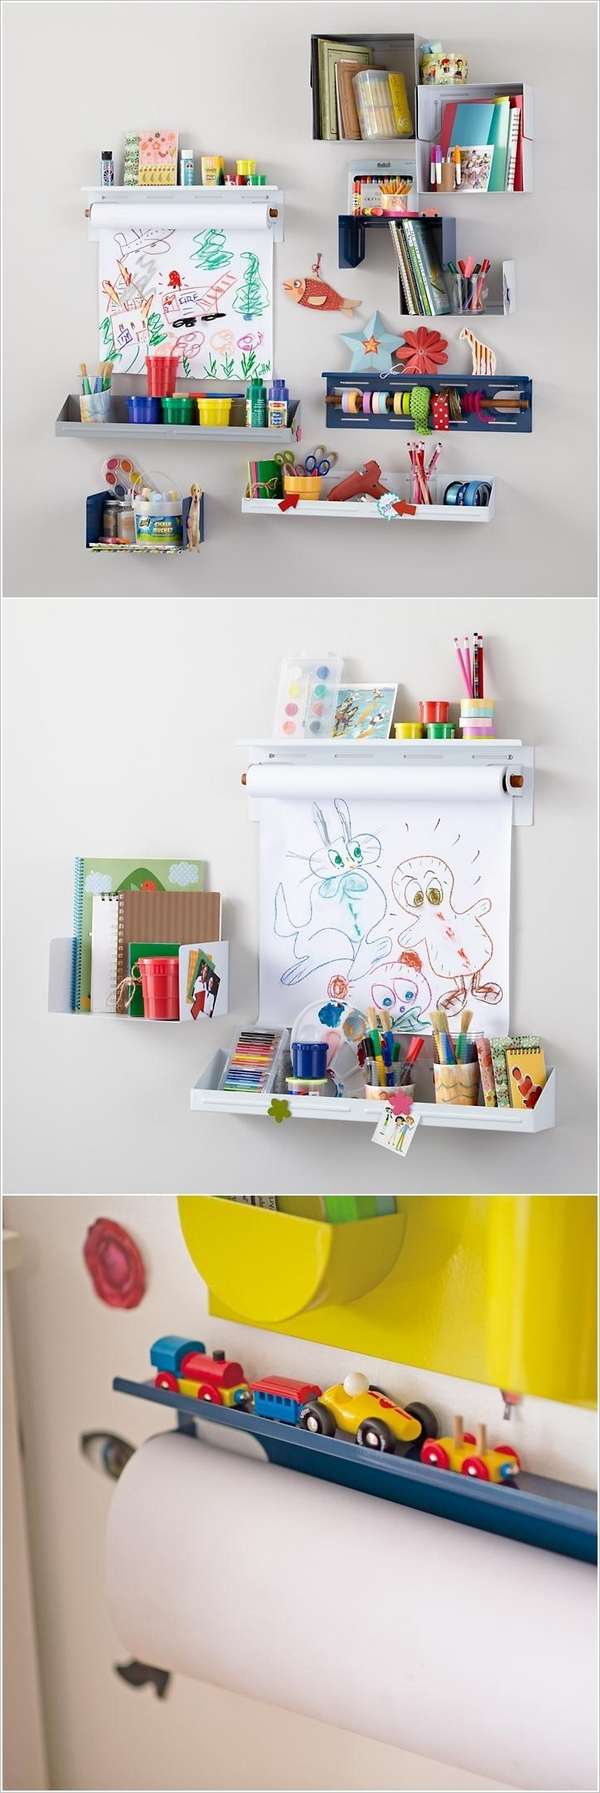 space-saving-playroom-wall-storage-ideas-wall-shelves-playroom-organizers